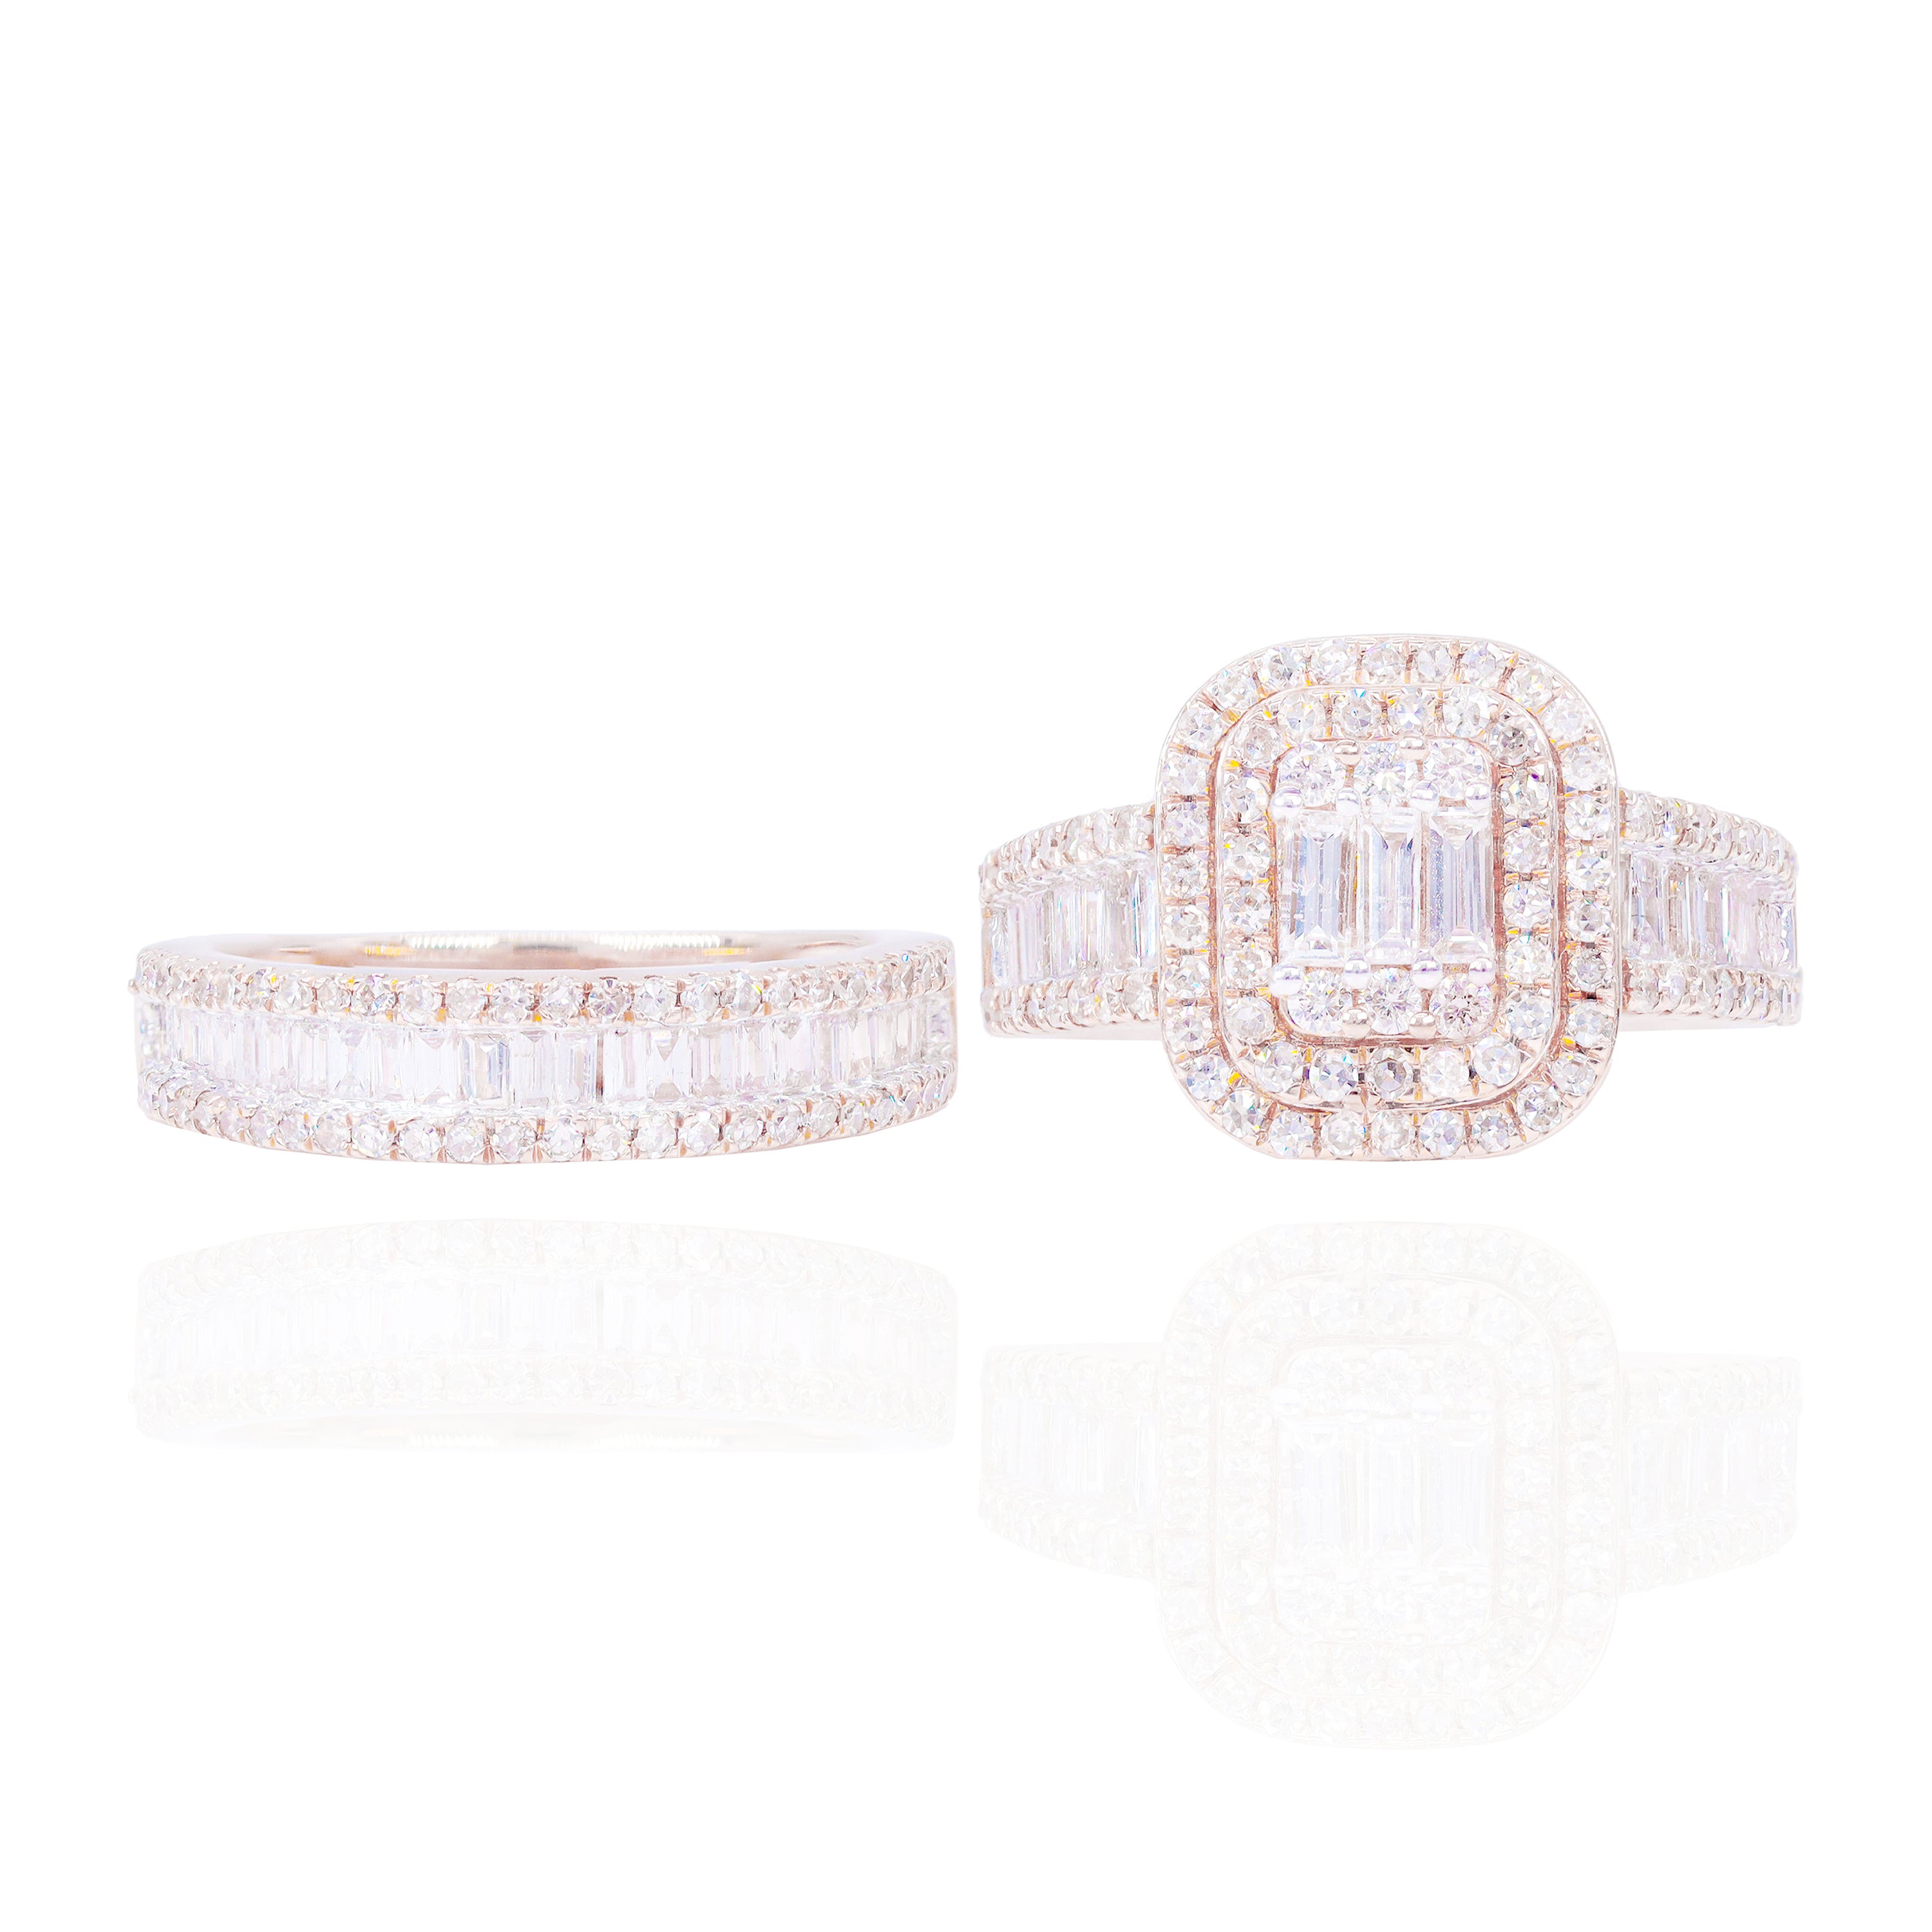 Emerald Shape Diamond Engagement Ring with Double Halo & Band